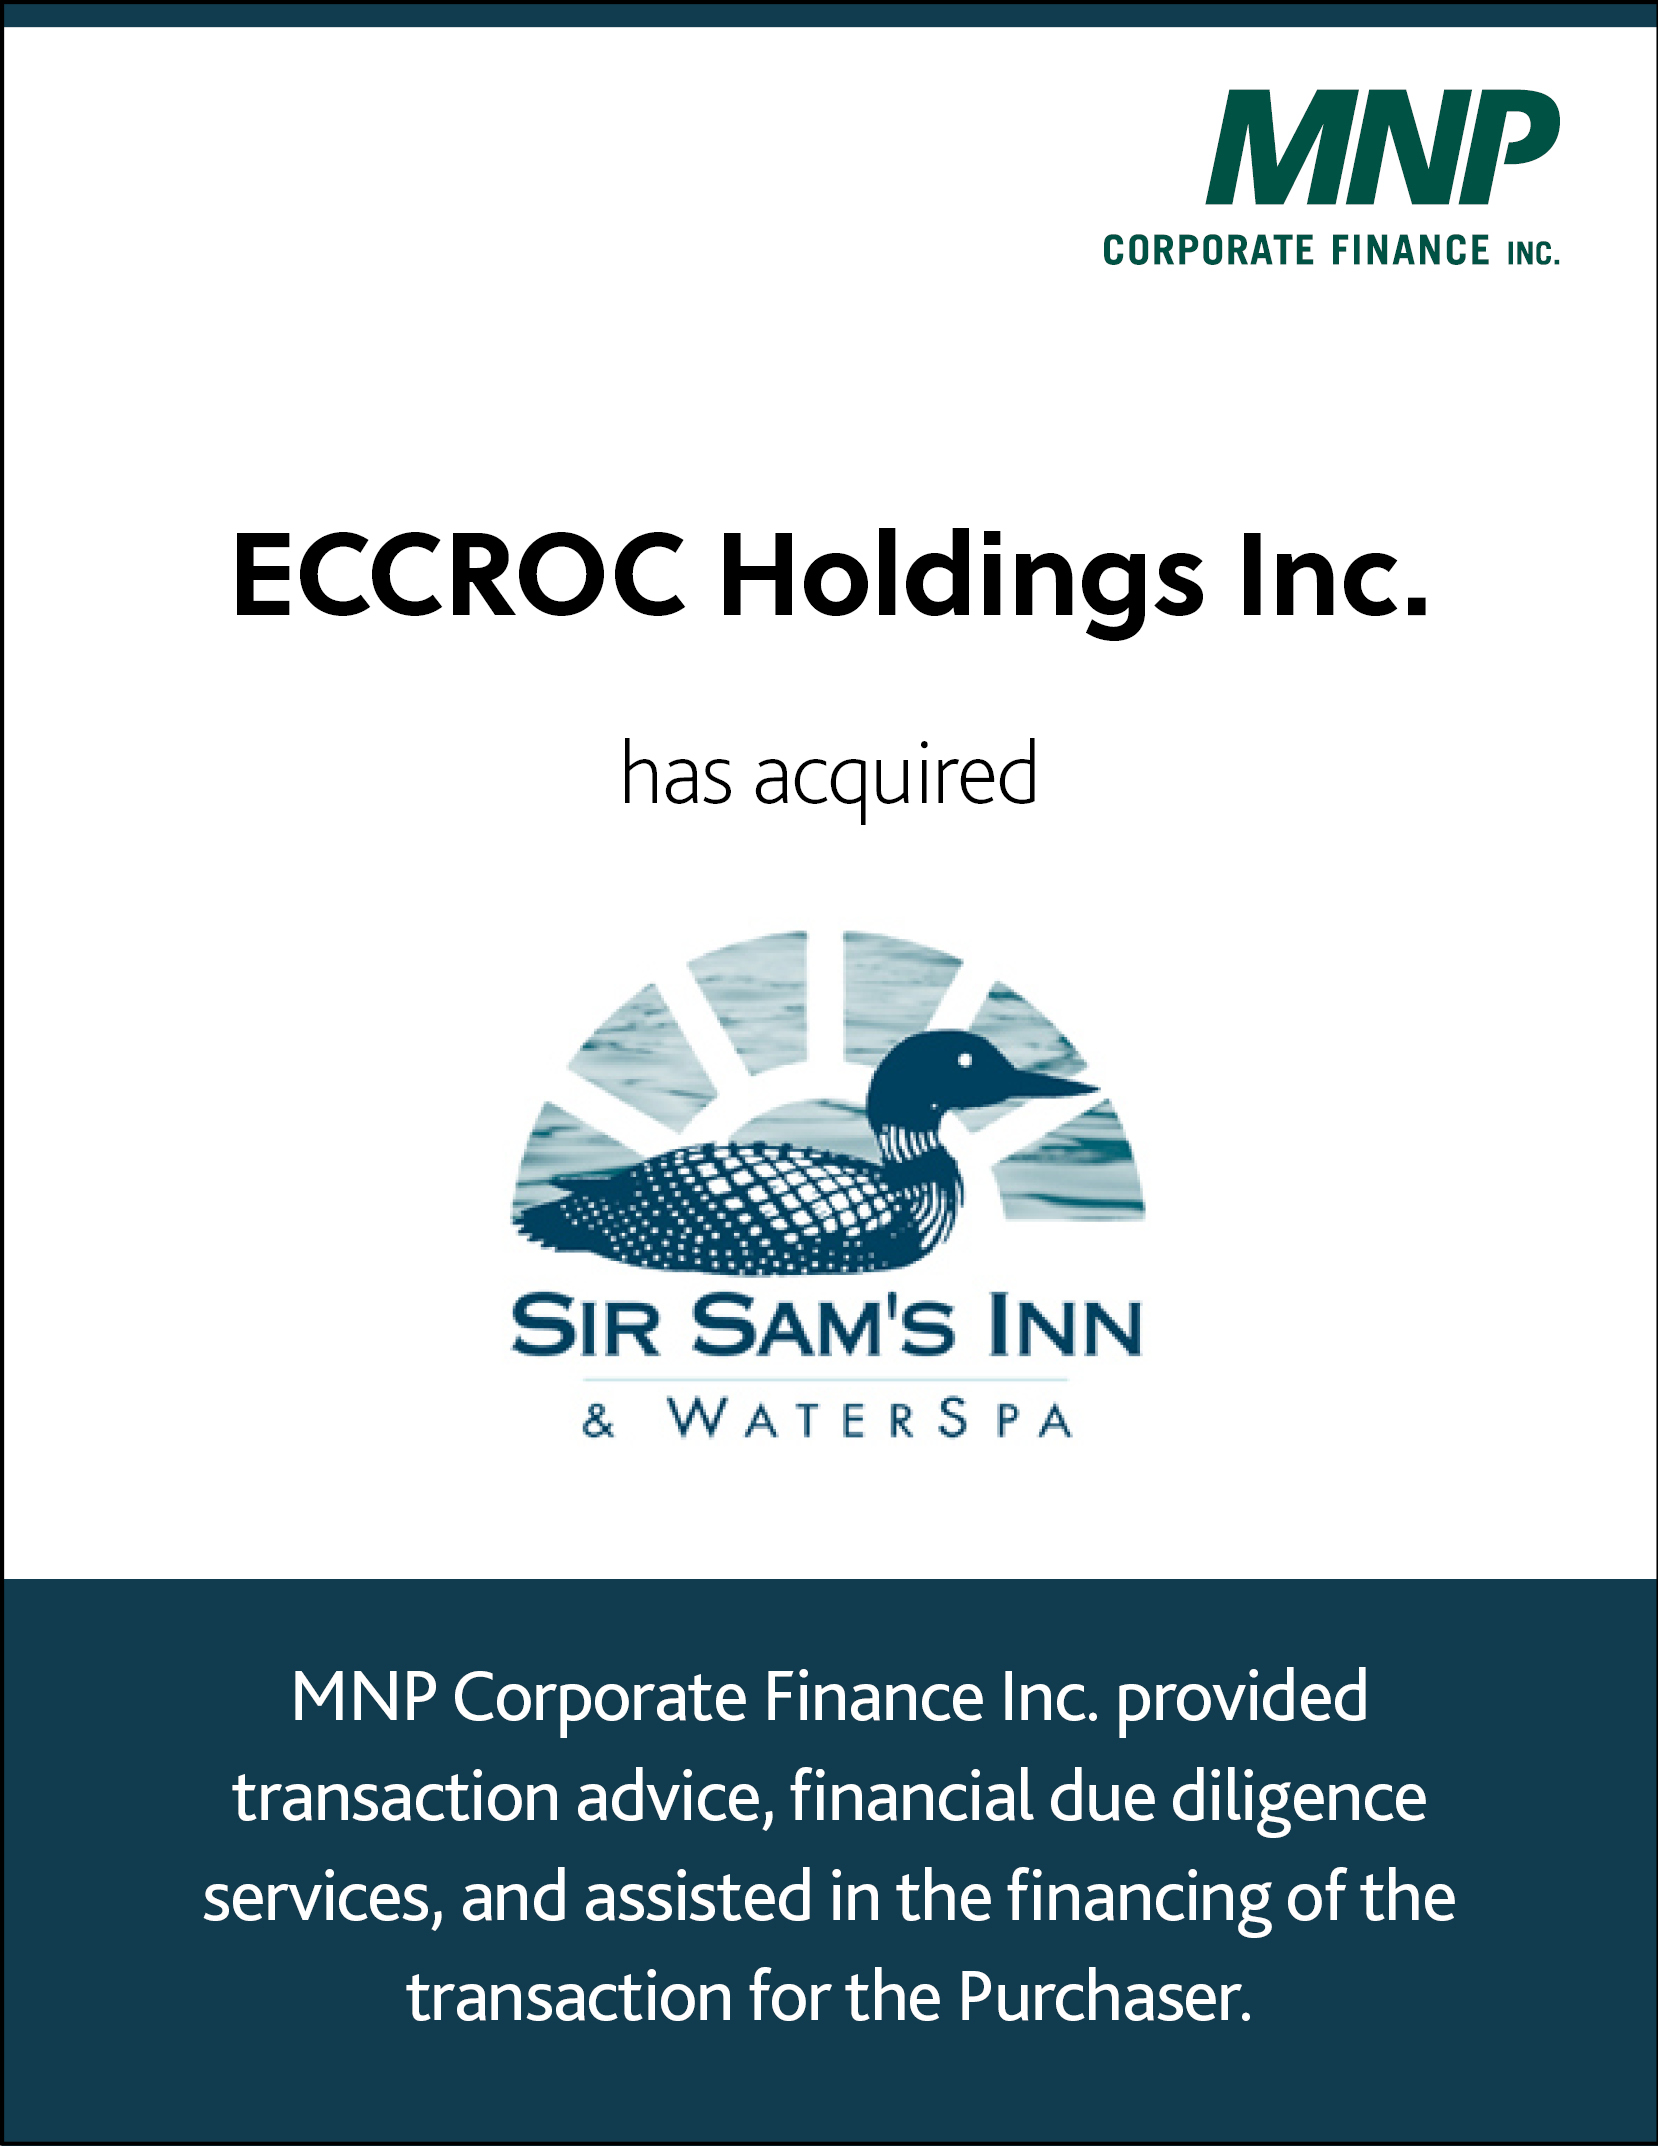 ECCROC Holdings Inc has acquired Sir Sam's Inn & Waterspa